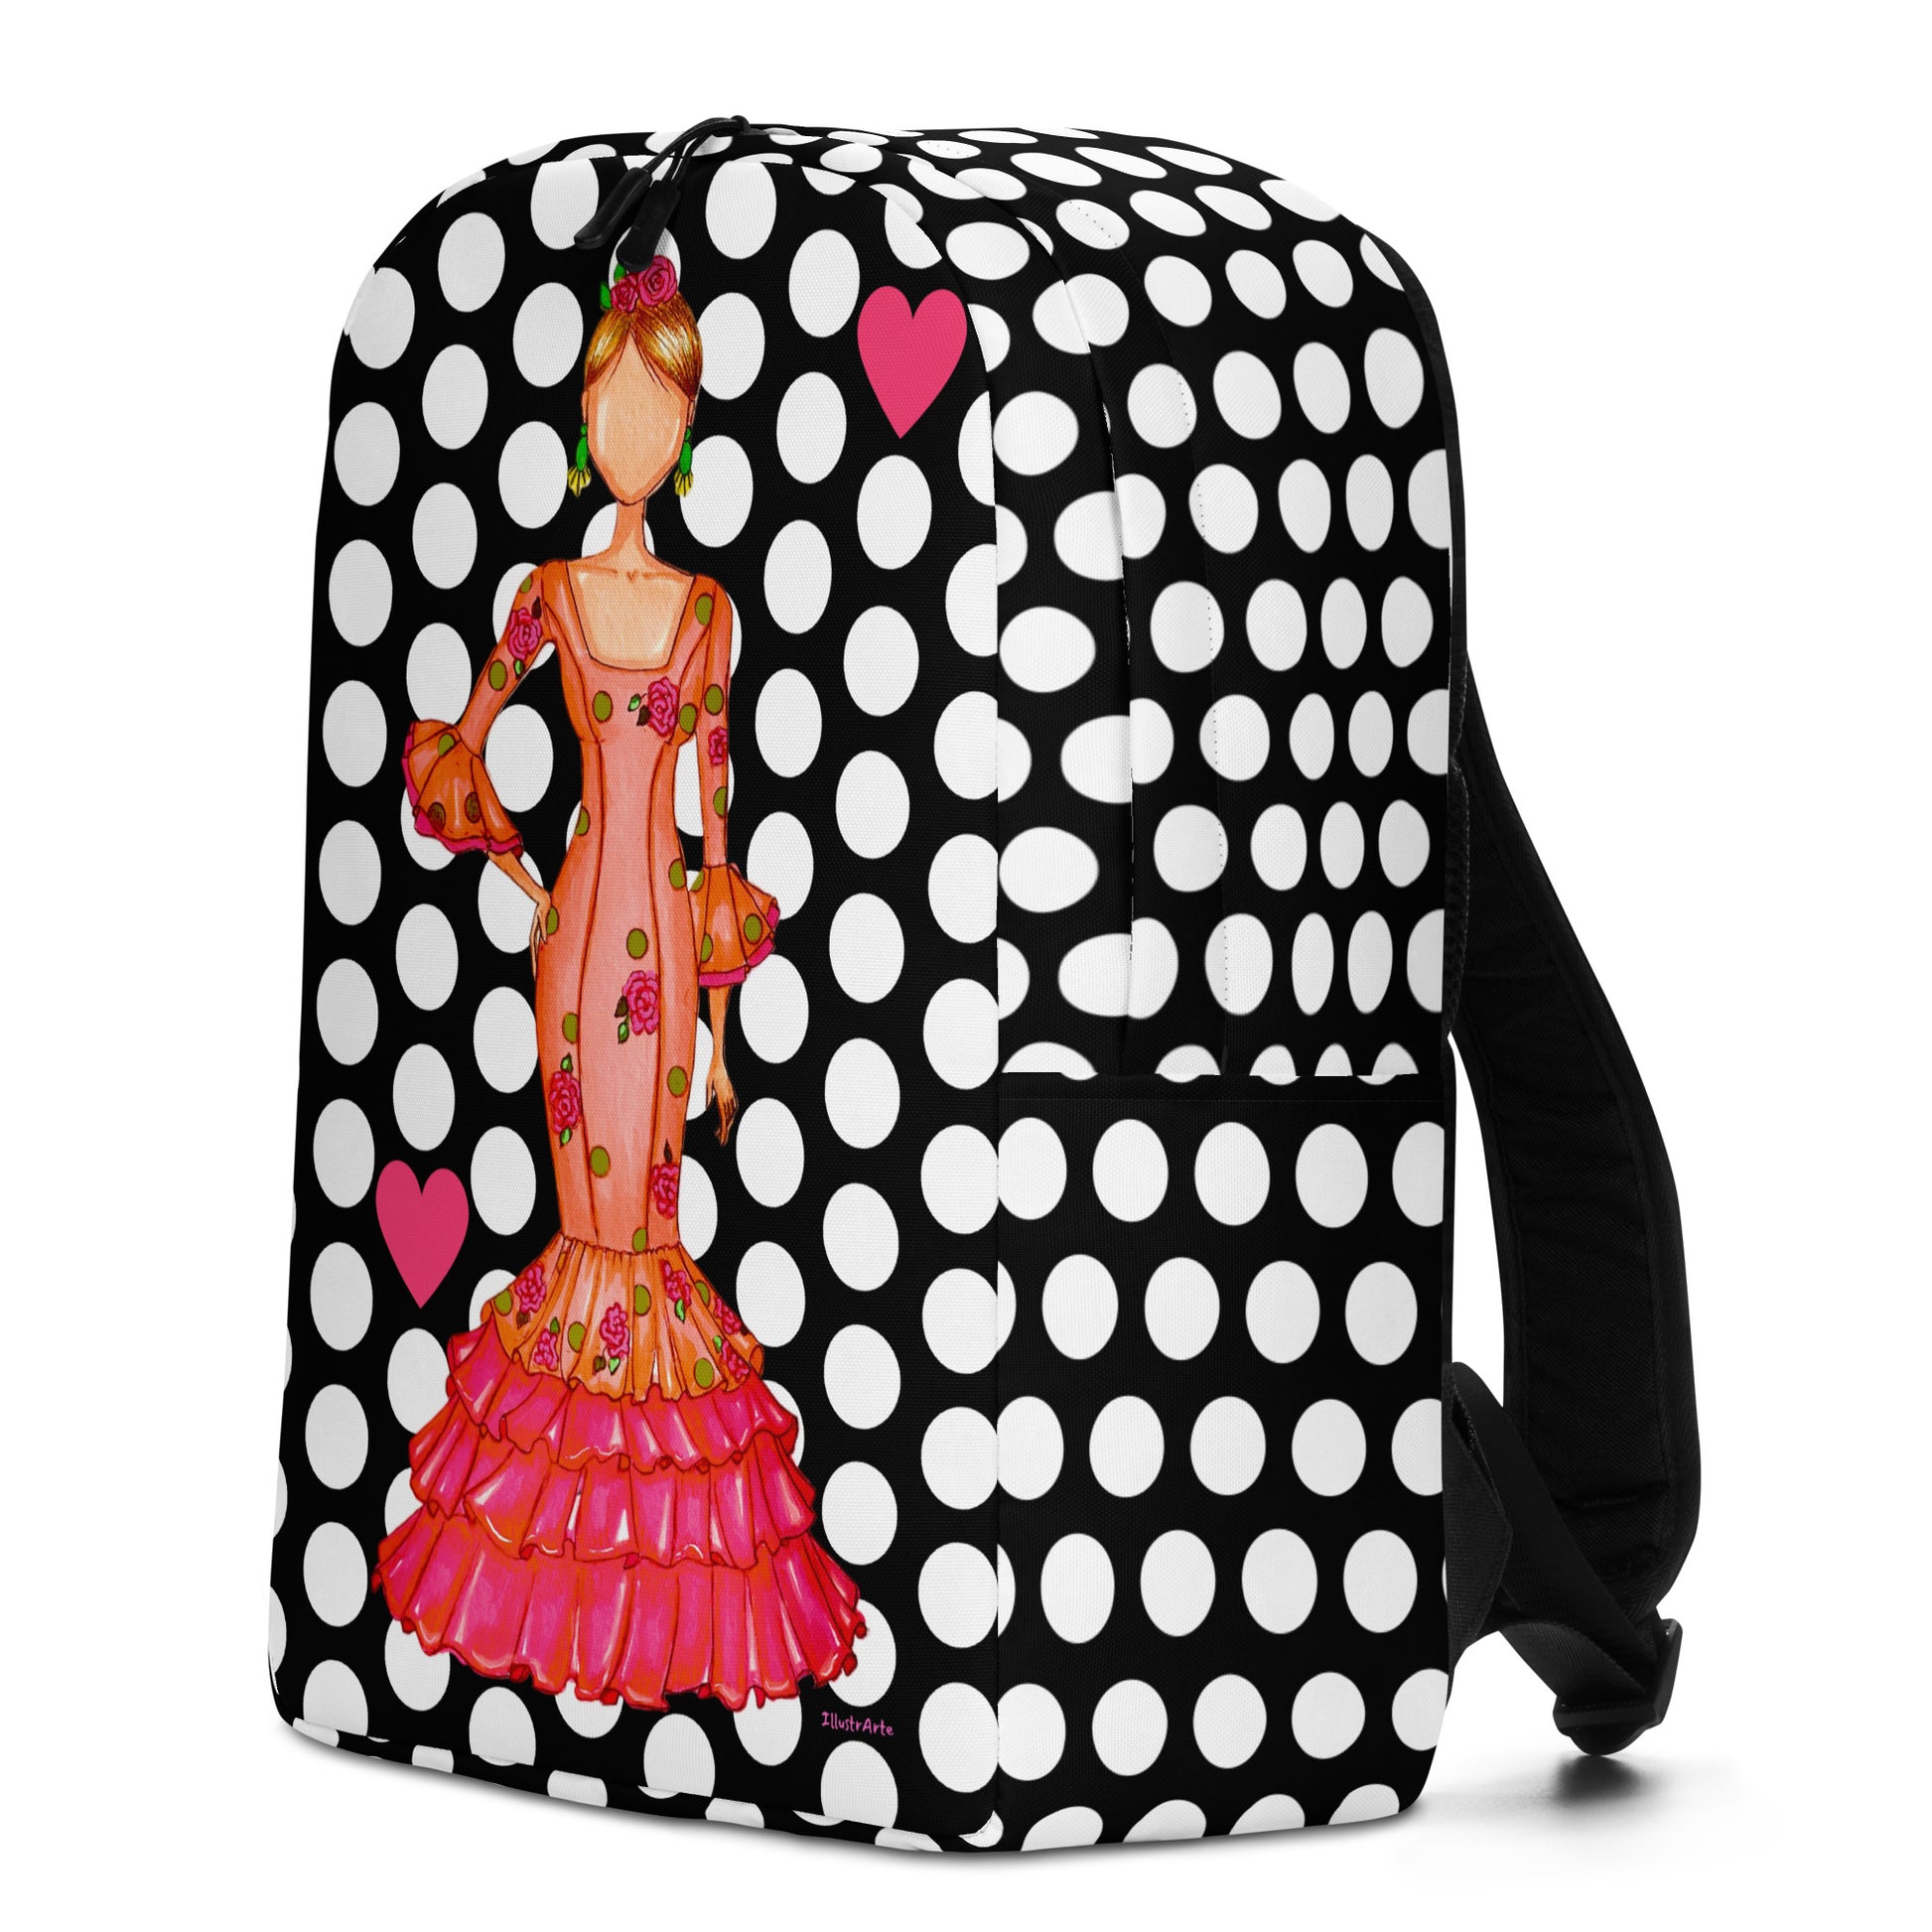 Flamenco Dancer Backpack, orange dress with a white polka dot design. - IllustrArte